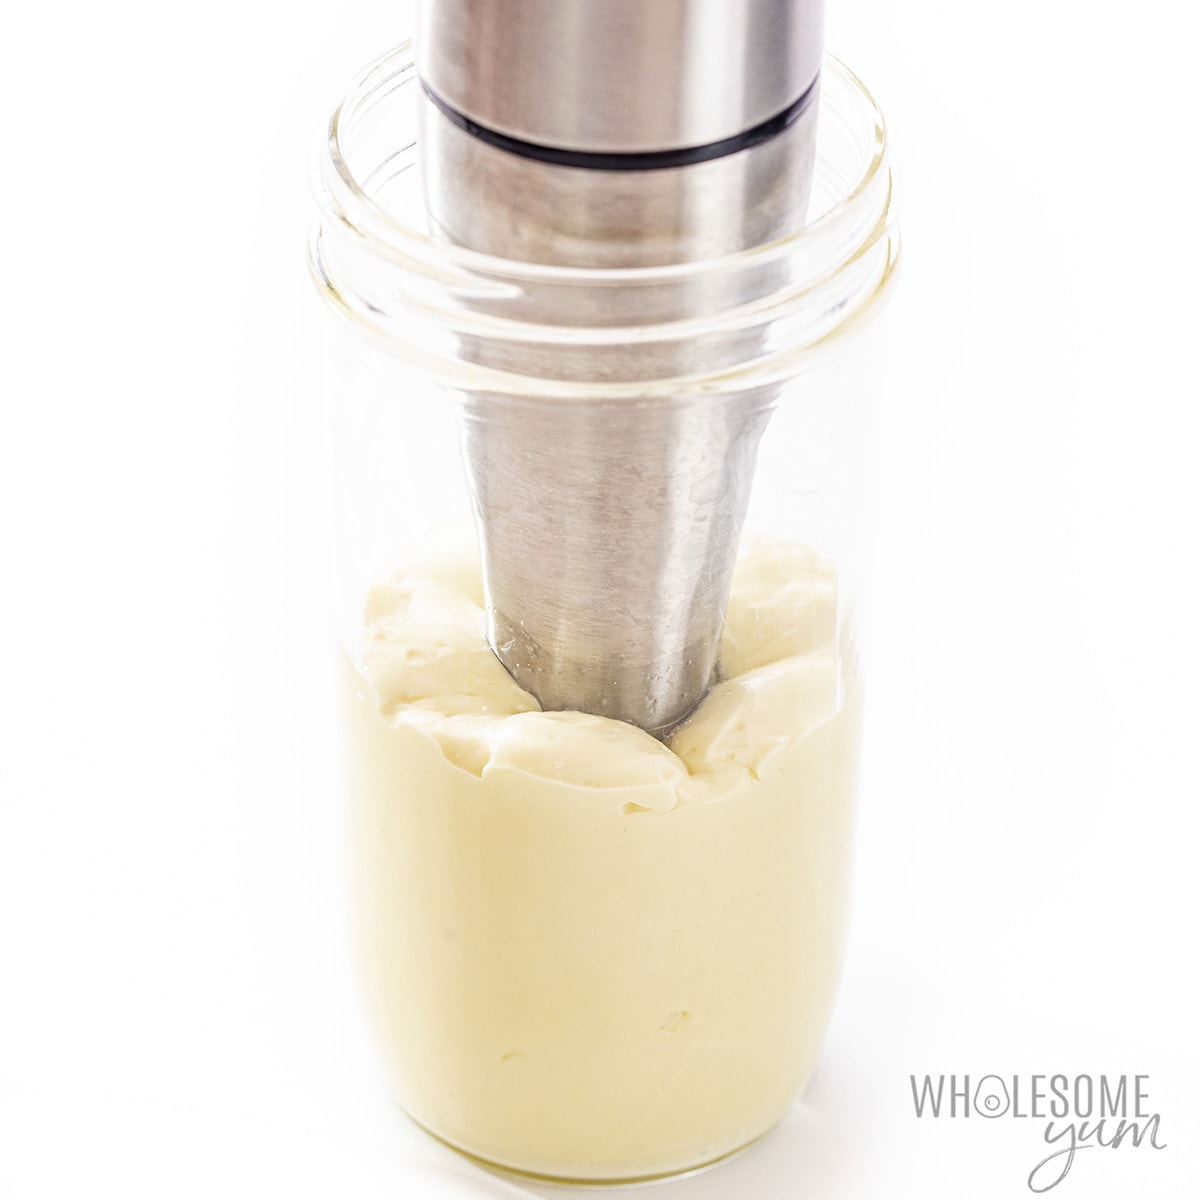 Homemade mayonnaise recipe forming in jar.